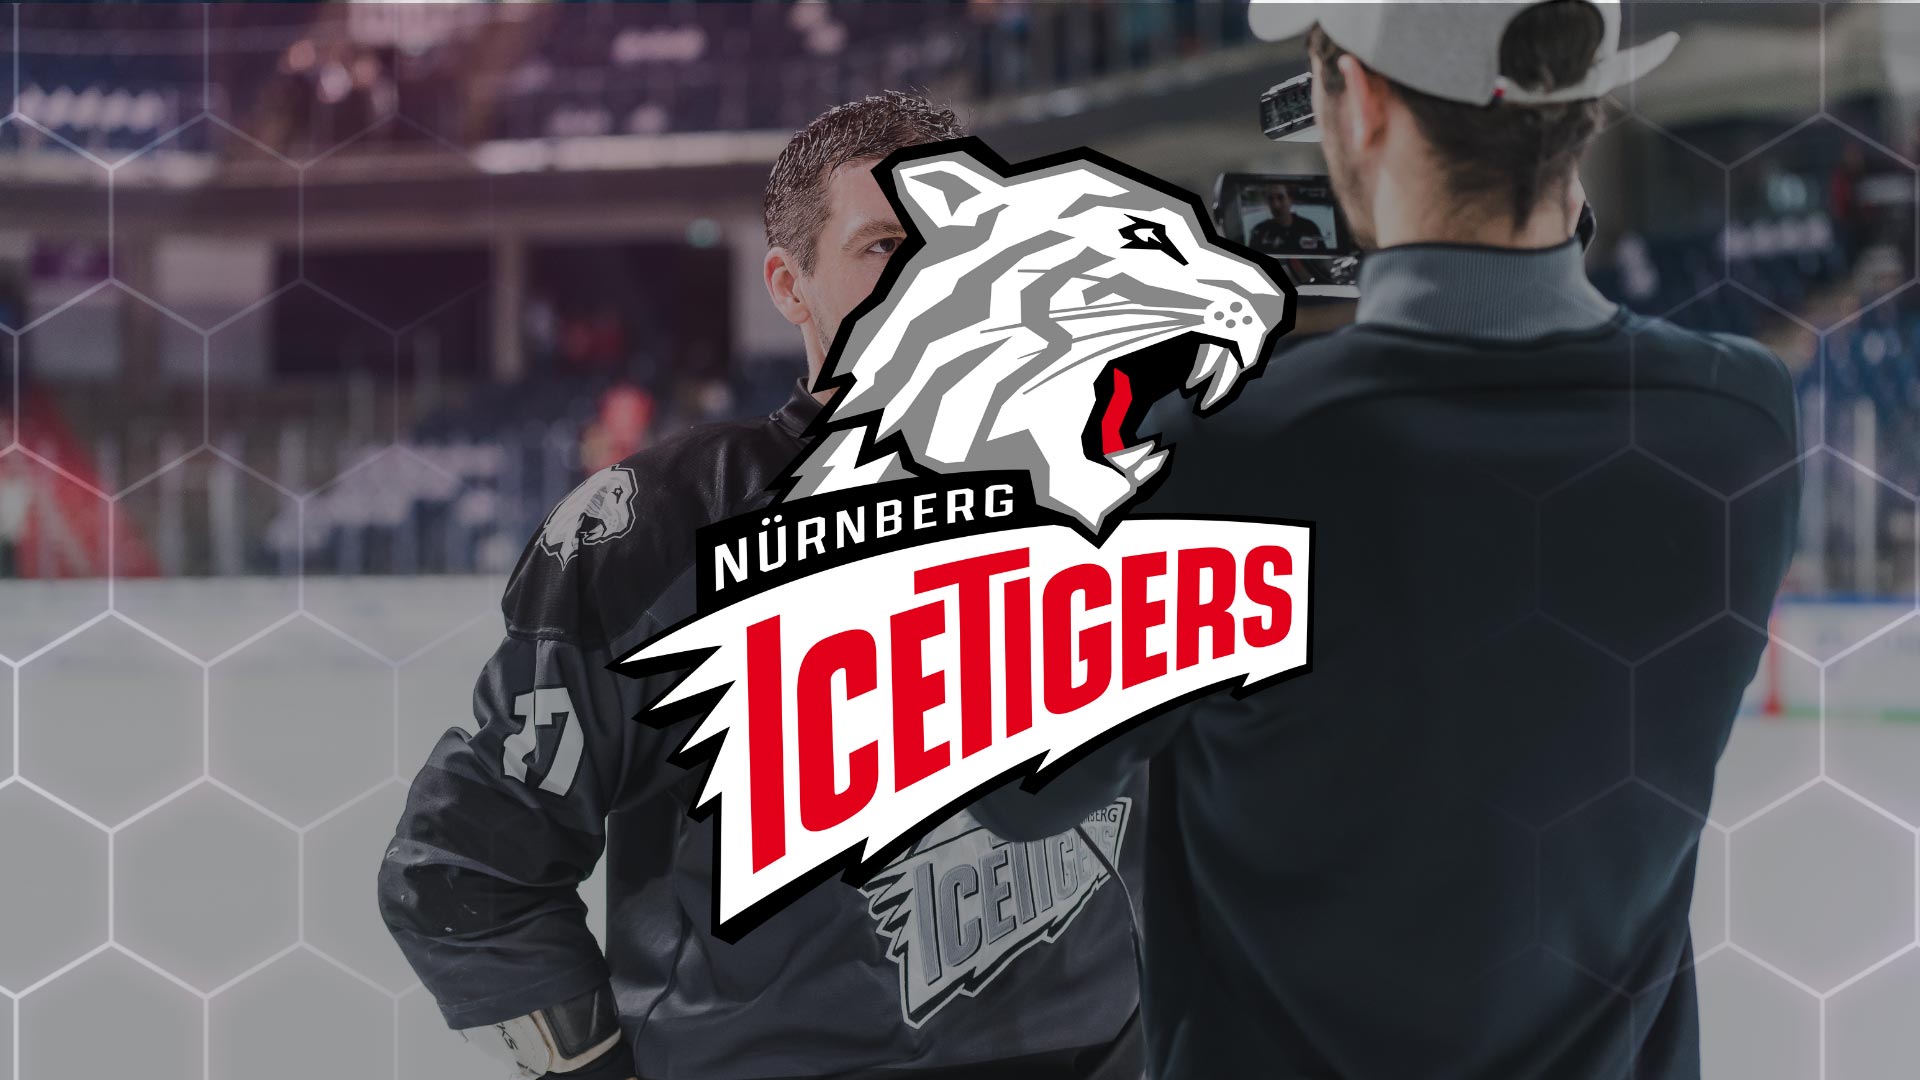 Nürnberg Ice Tigers wird MGN Regionalpartner - Digital News - MGN Mediengruppe Nürnberg GmbH